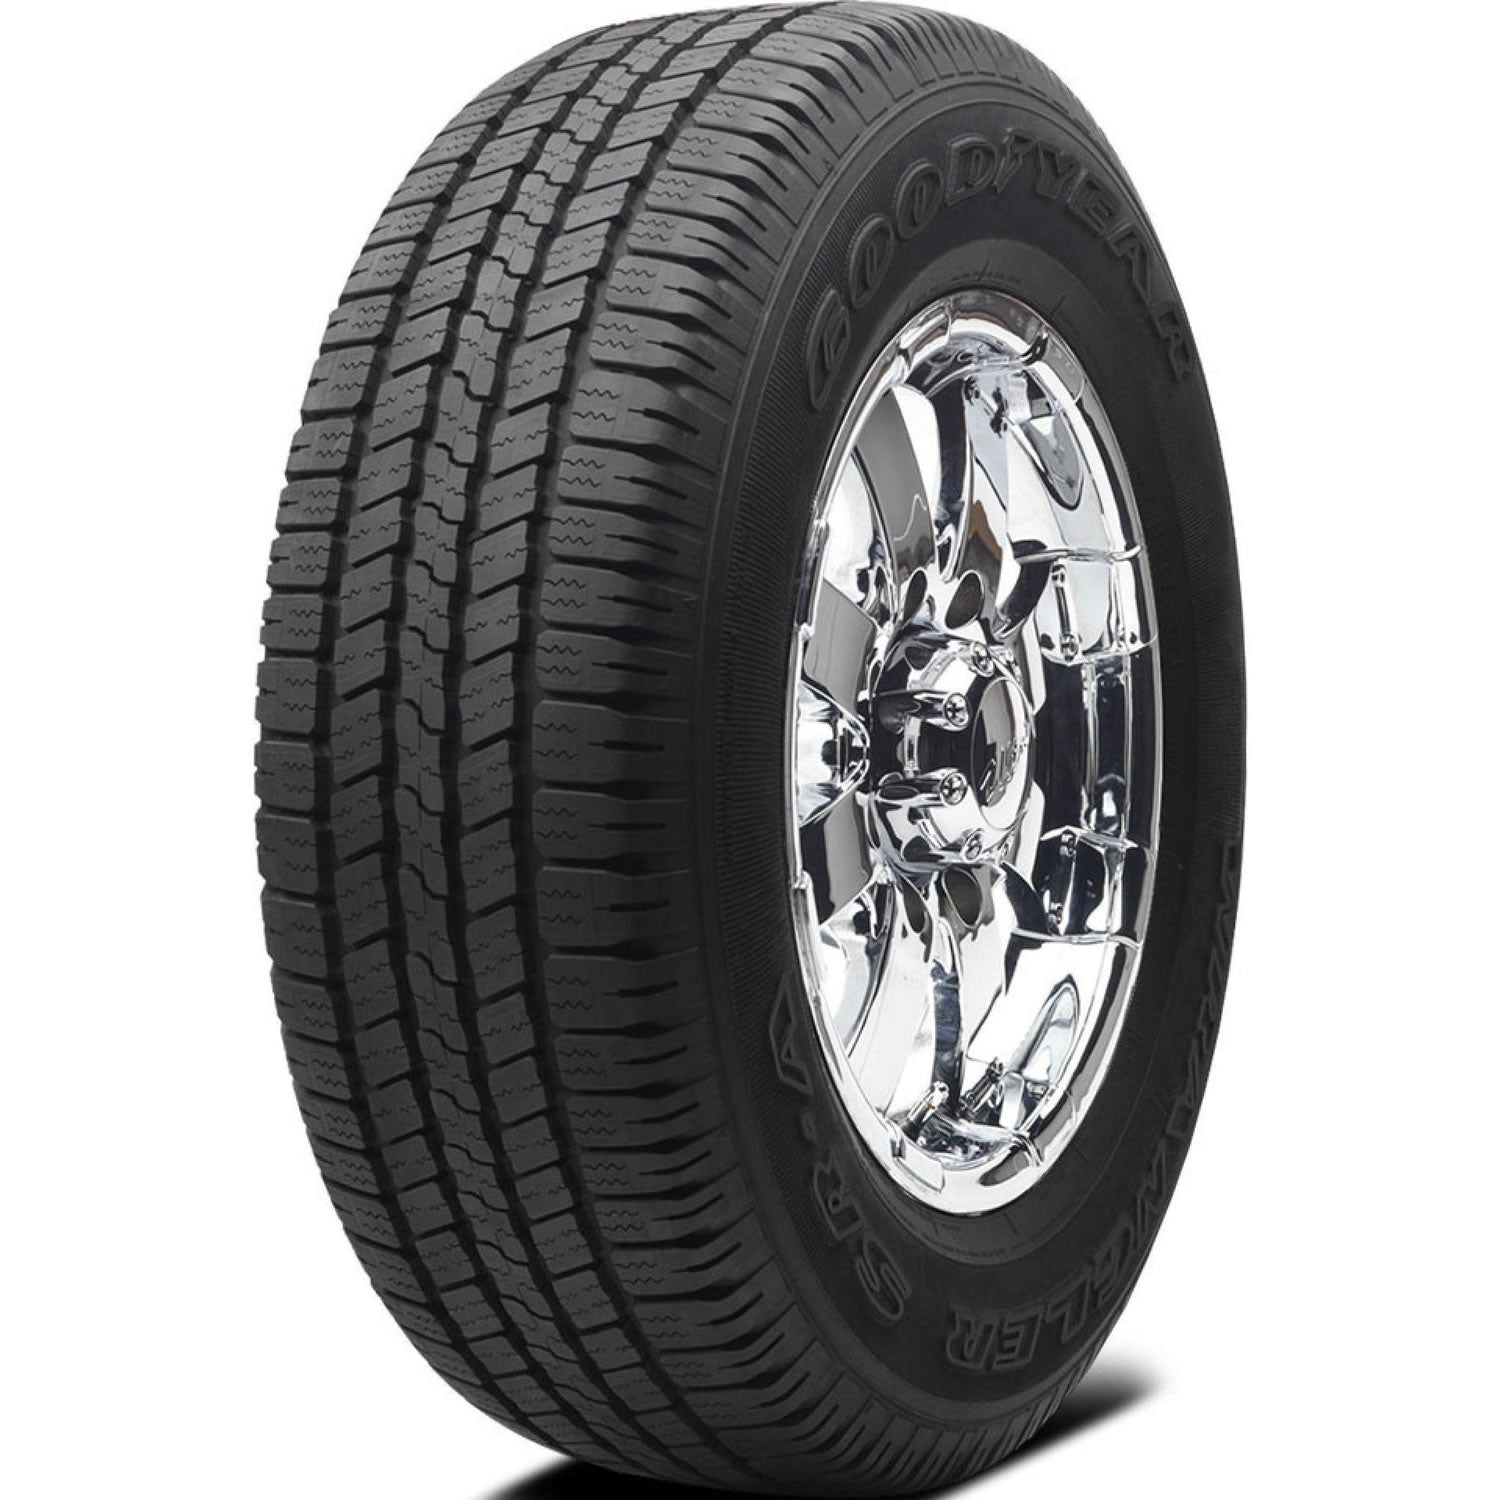 GOODYEAR WRANGLER SR-A P265/75R16 (31.7X10.5R 16) Tires